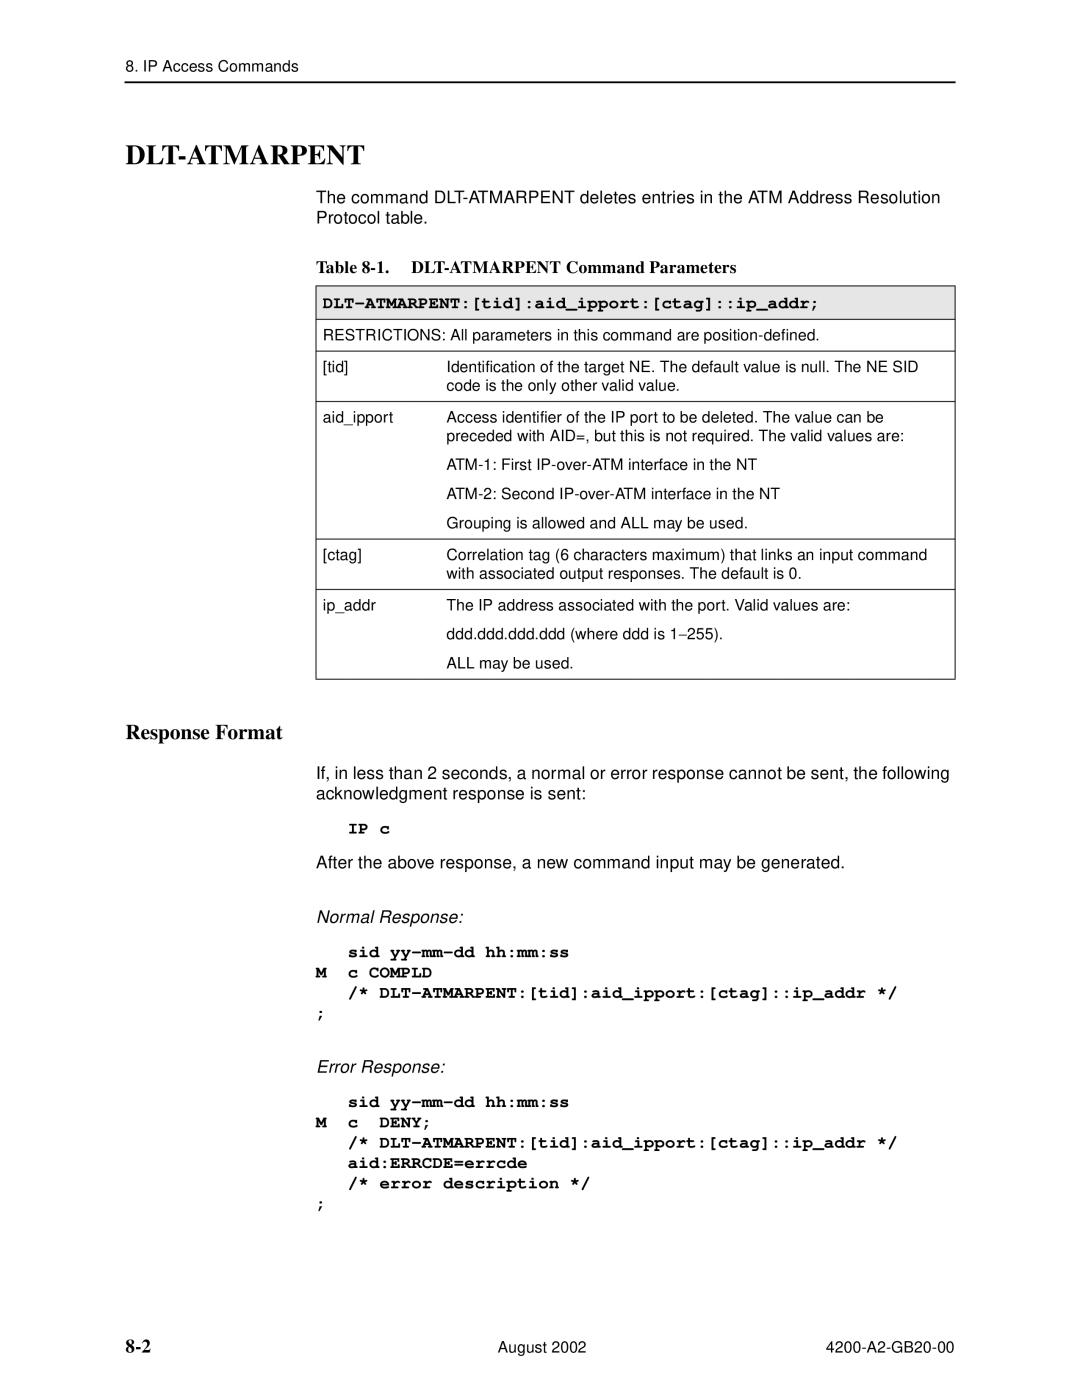 Paradyne 4200 Dlt-Atmarpent, 1. DLT-ATMARPENT Command Parameters, DLT-ATMARPENTtidaidipportctagipaddr, Response Format 